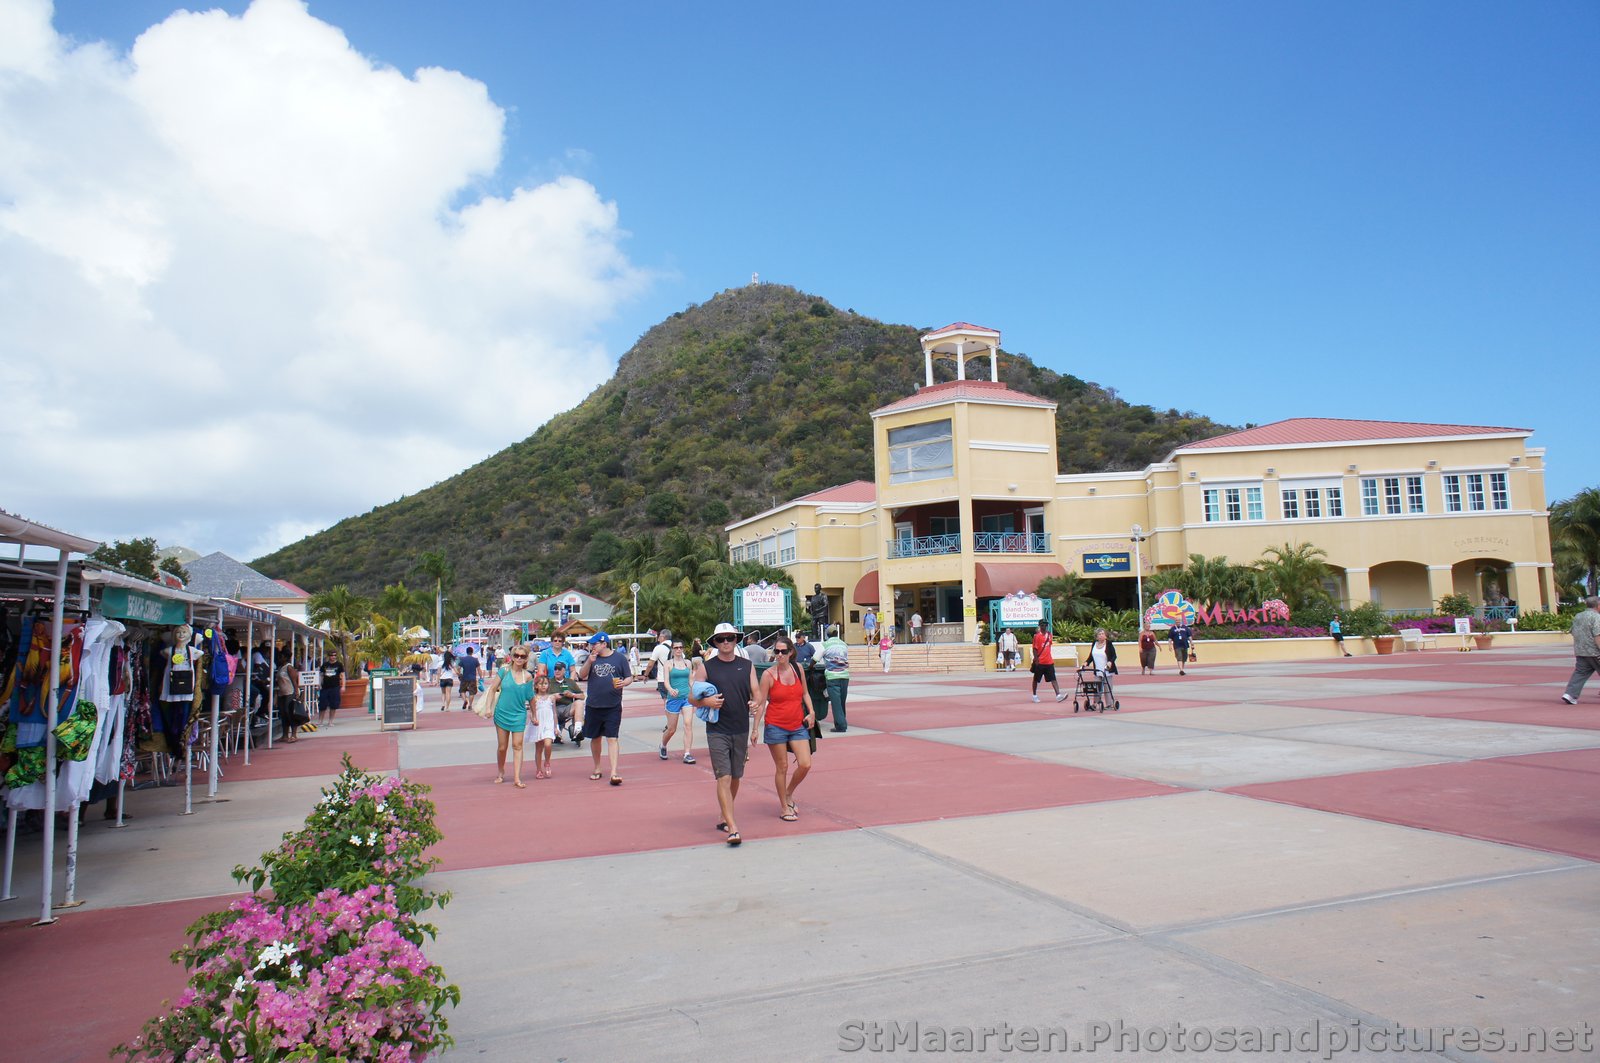 Tourists walk around the St Maarten cruise center.jpg
